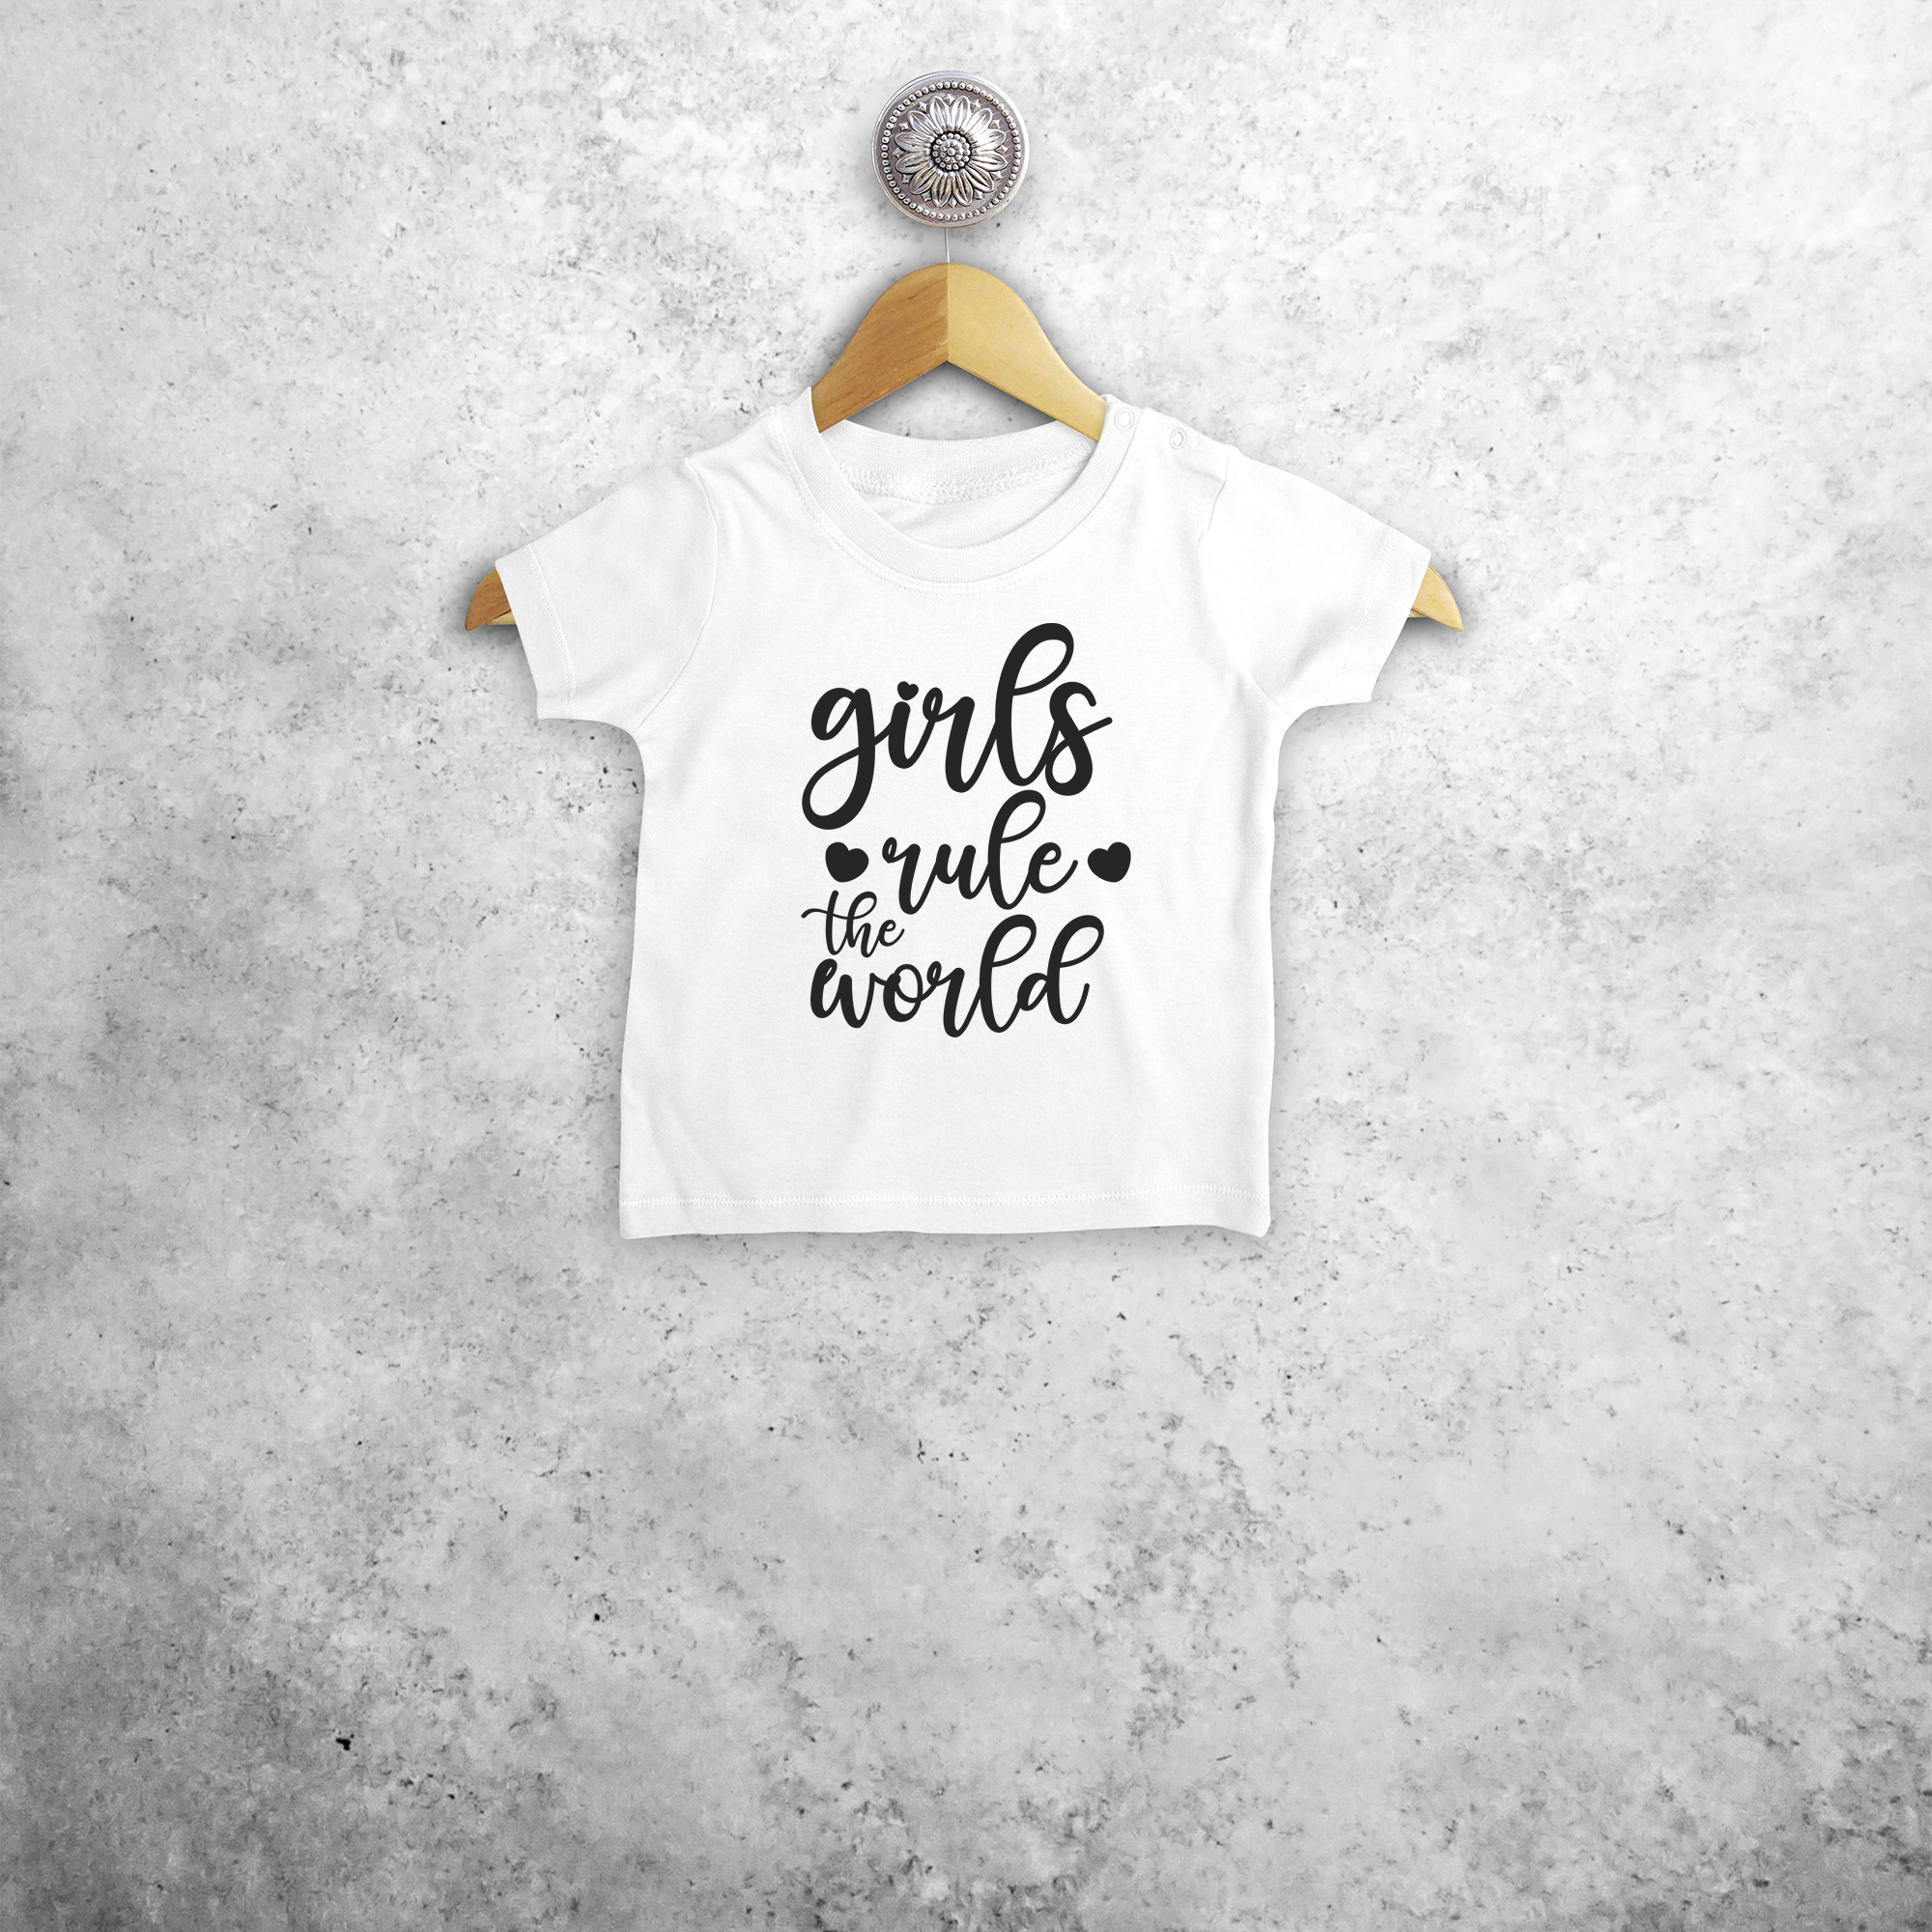 'Girls rule the world' baby shirt met korte mouwen